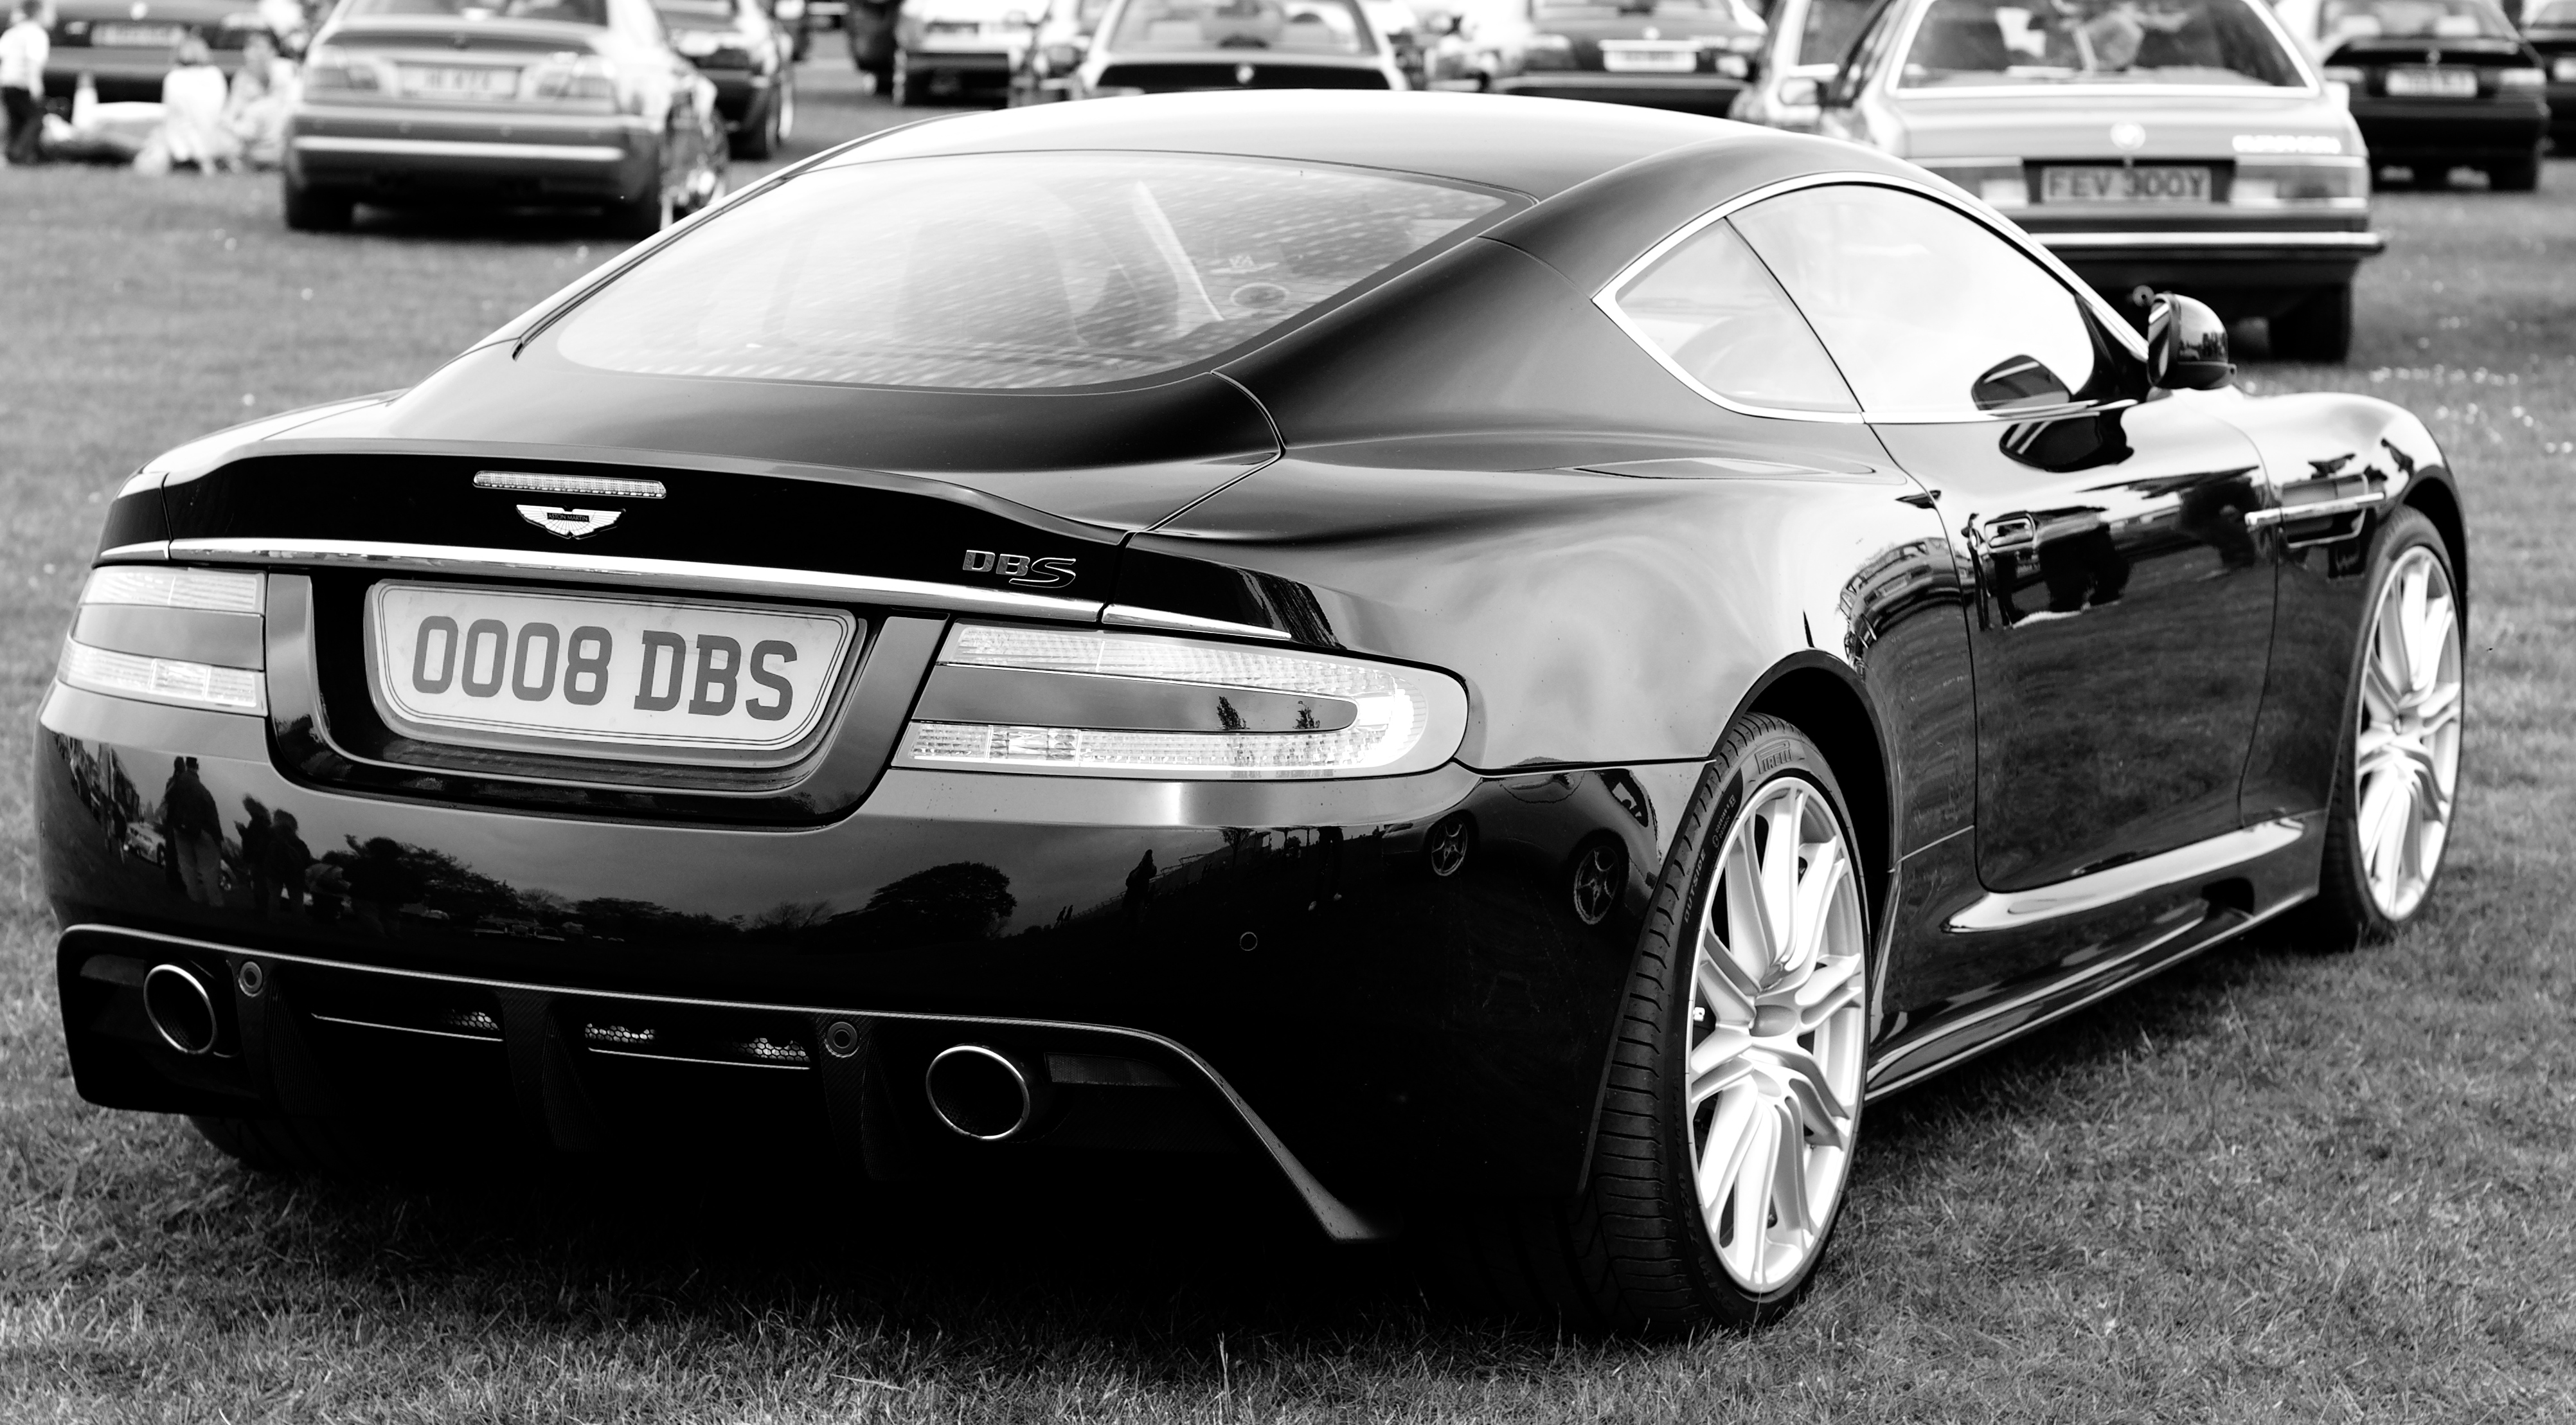 Aston Martin DBS V12 coupé (rear) b-w